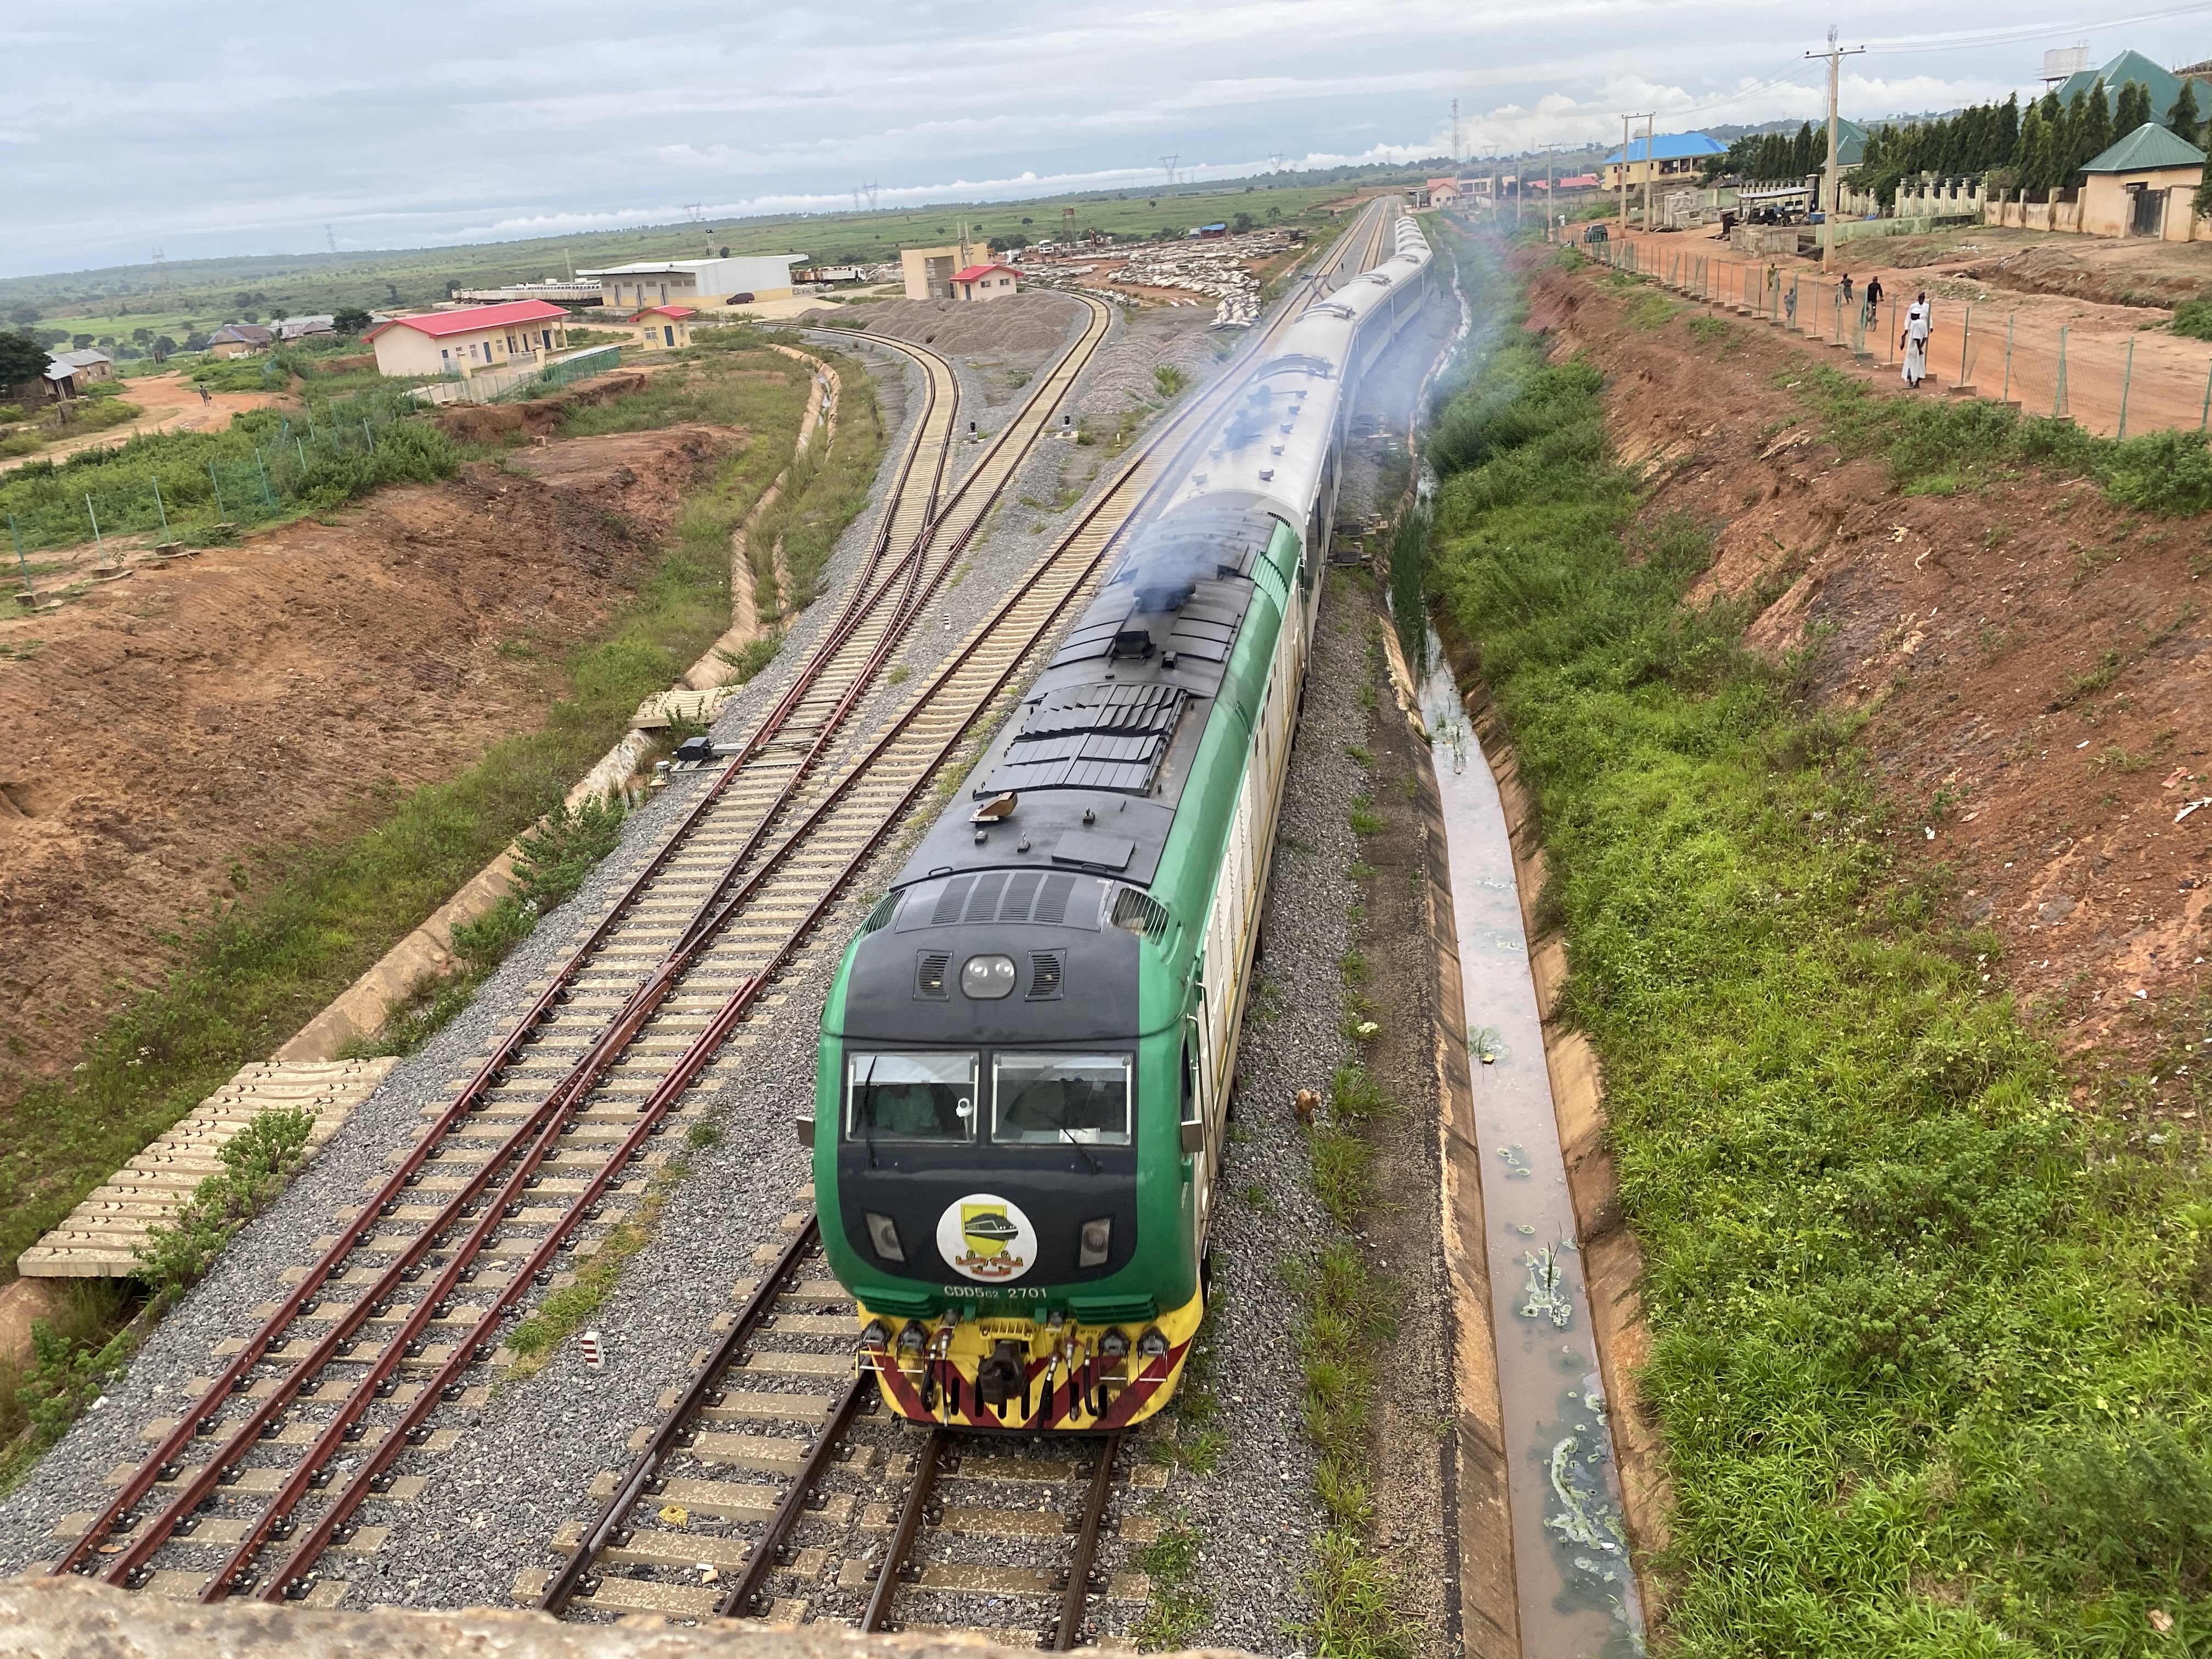 Nigeria's railway people: Life alongside a high-speed rail link